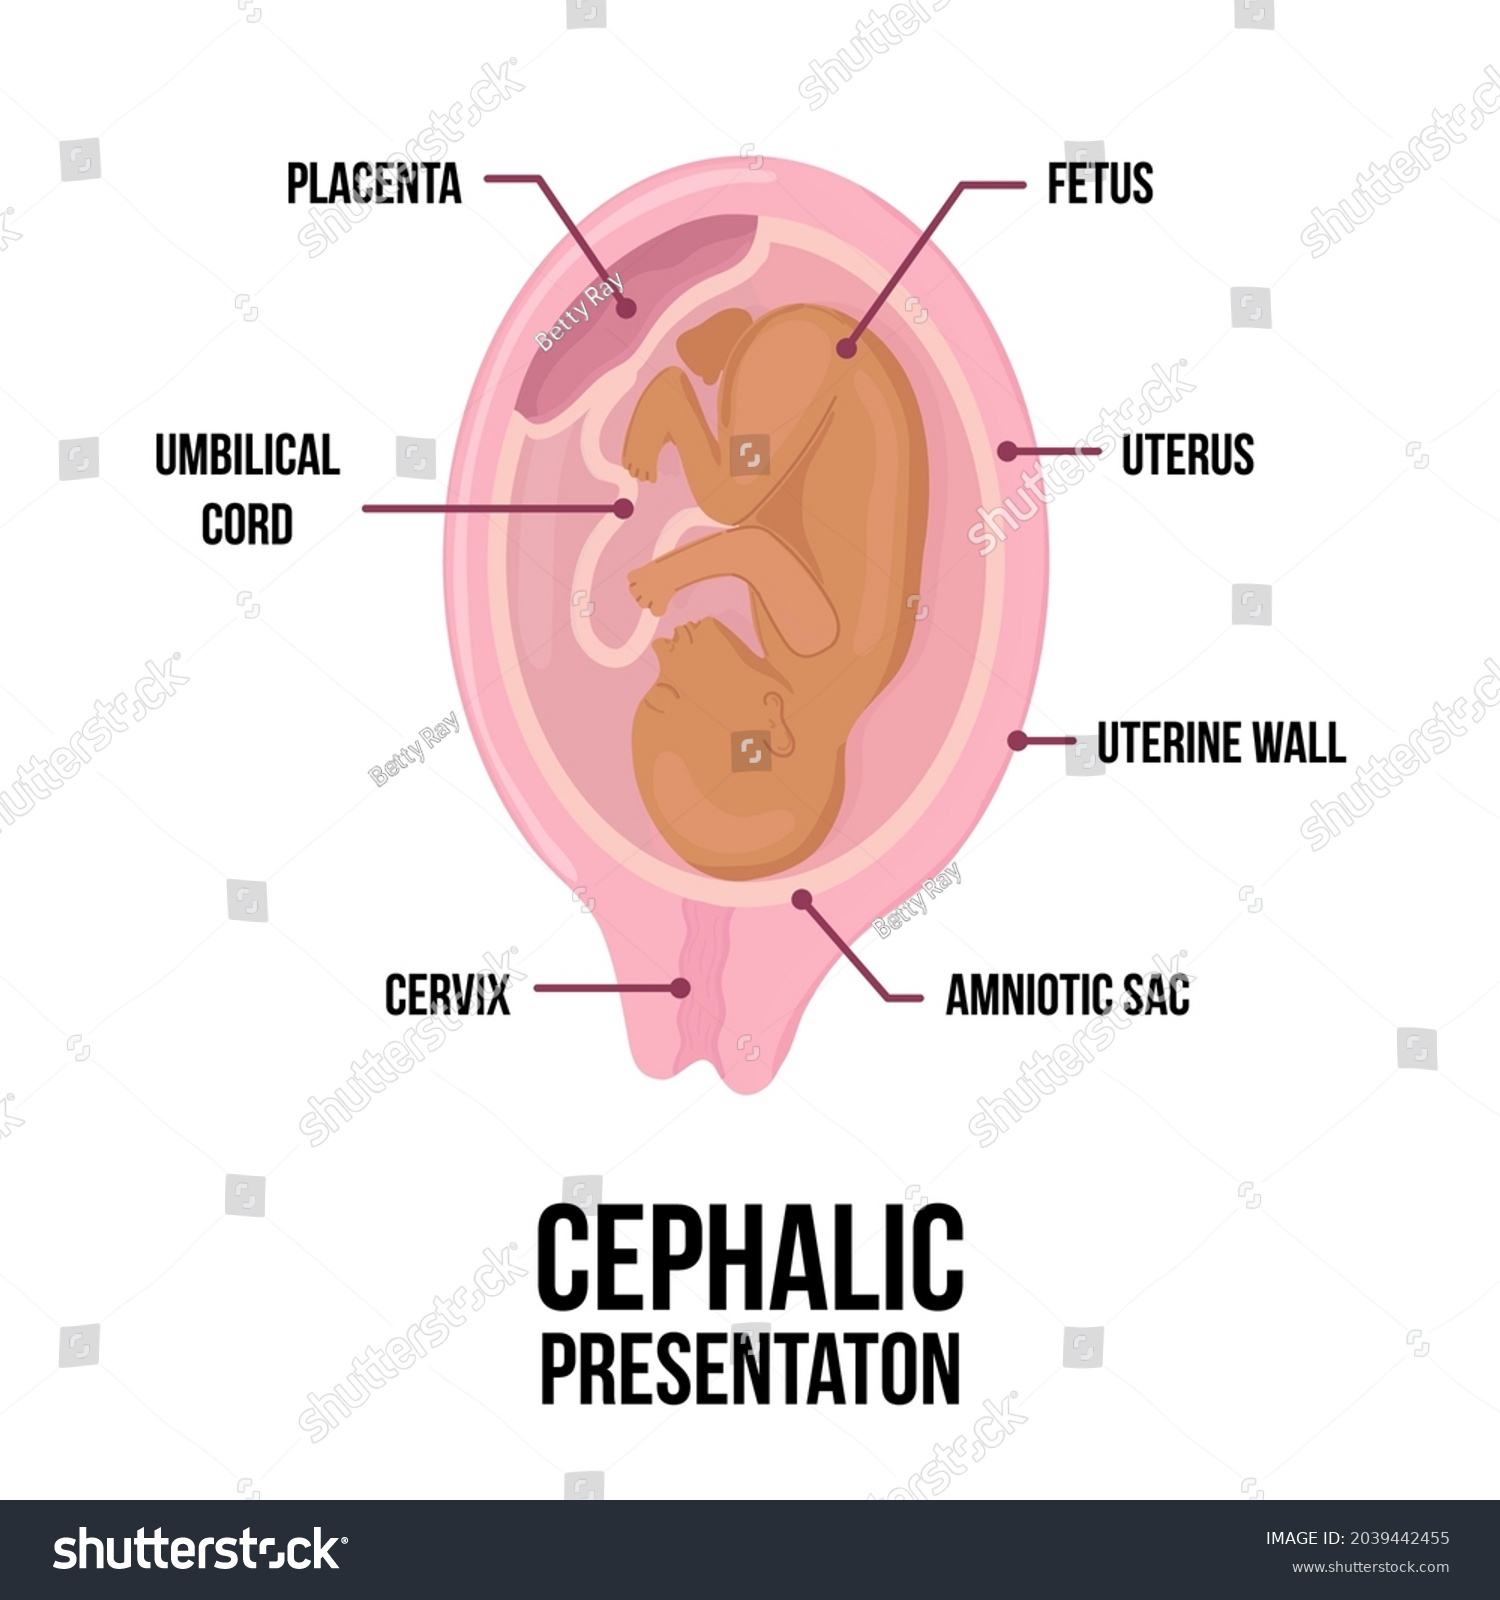 gestation in cephalic presentation means